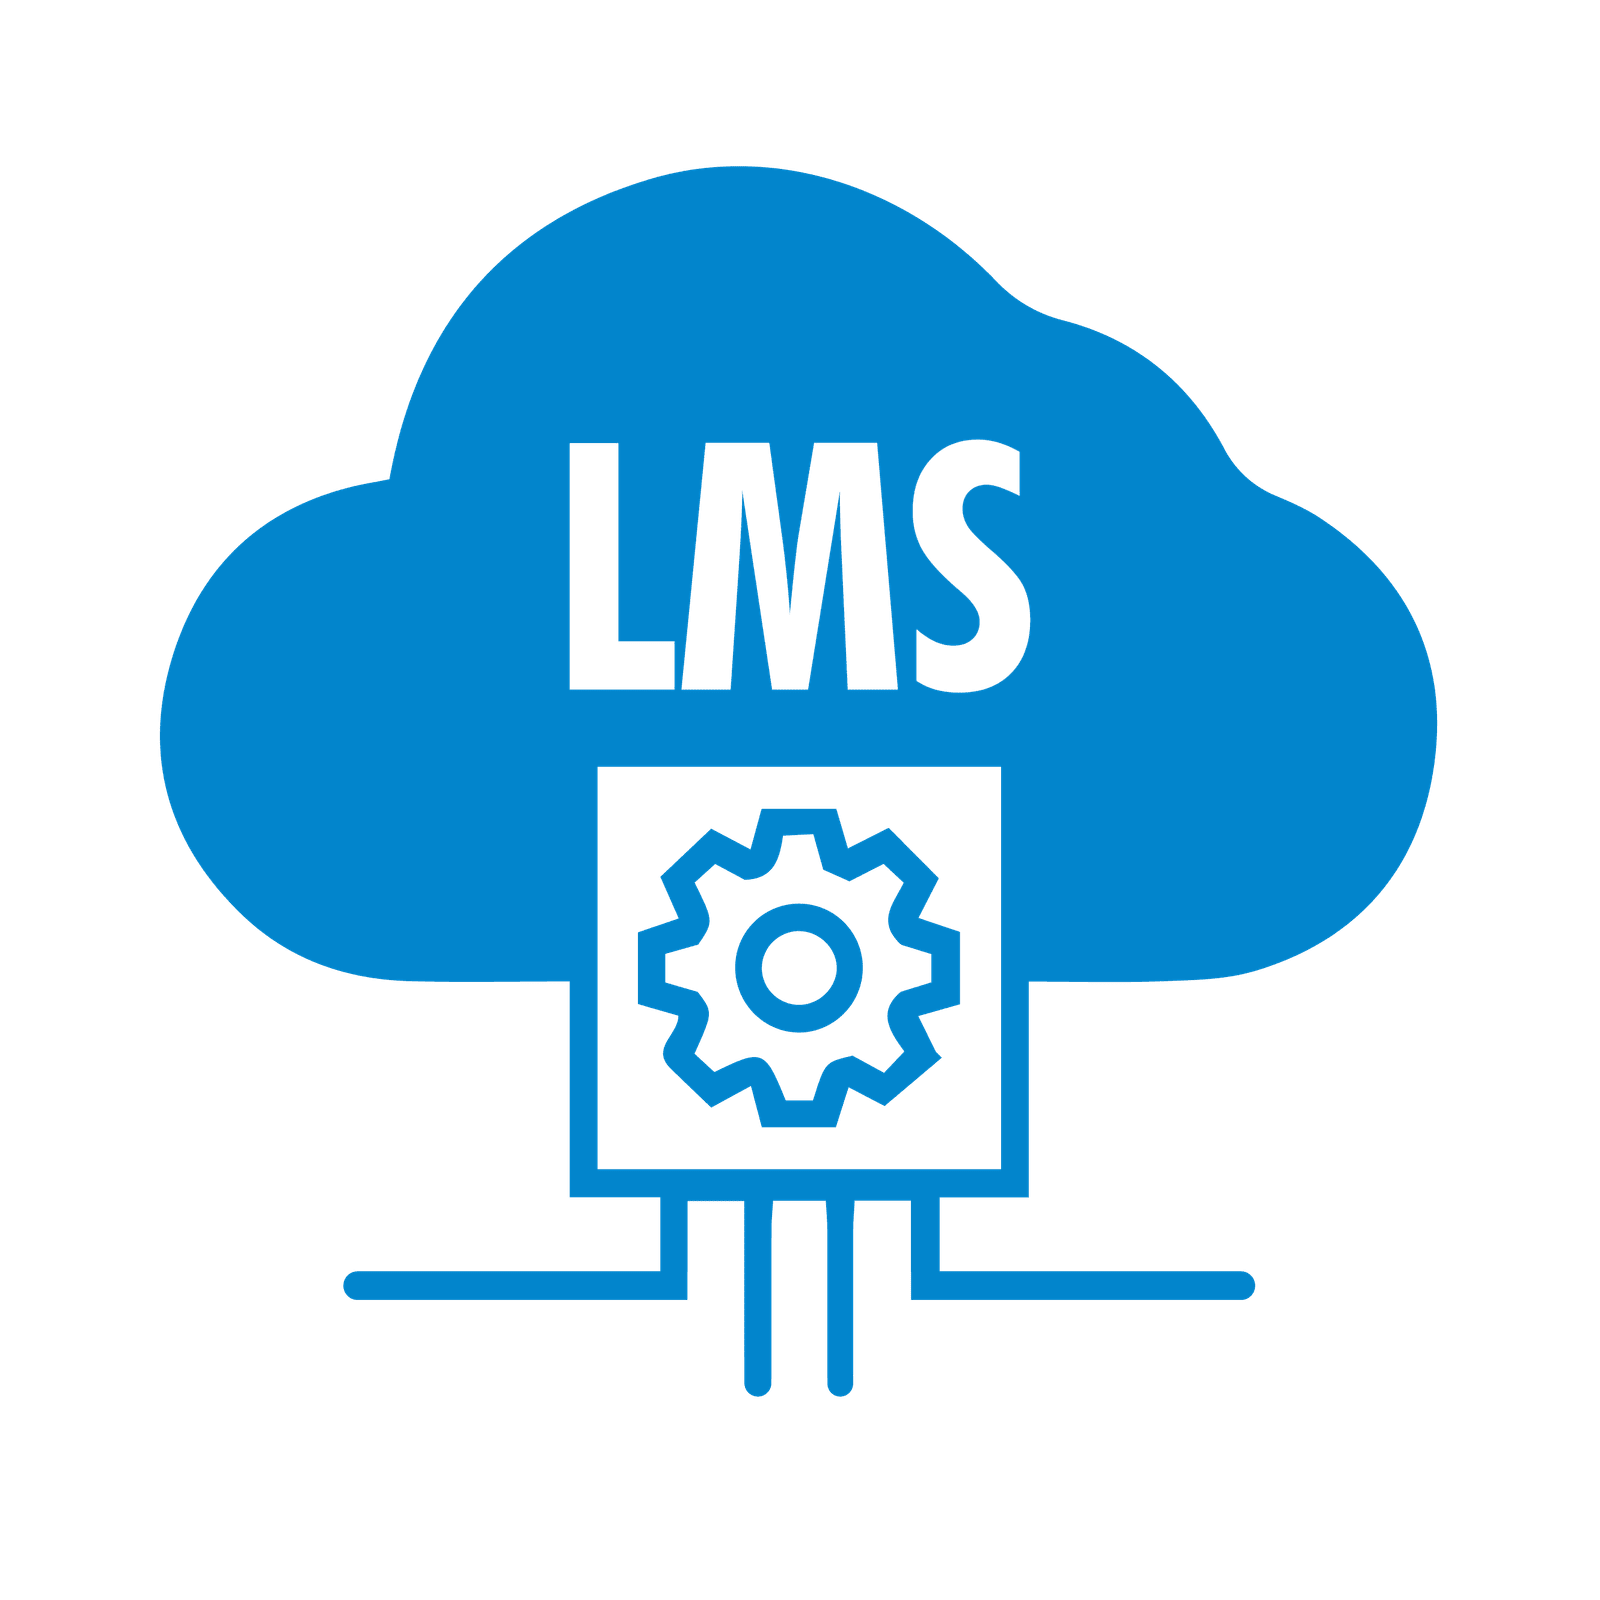 Cloud-Based LMS